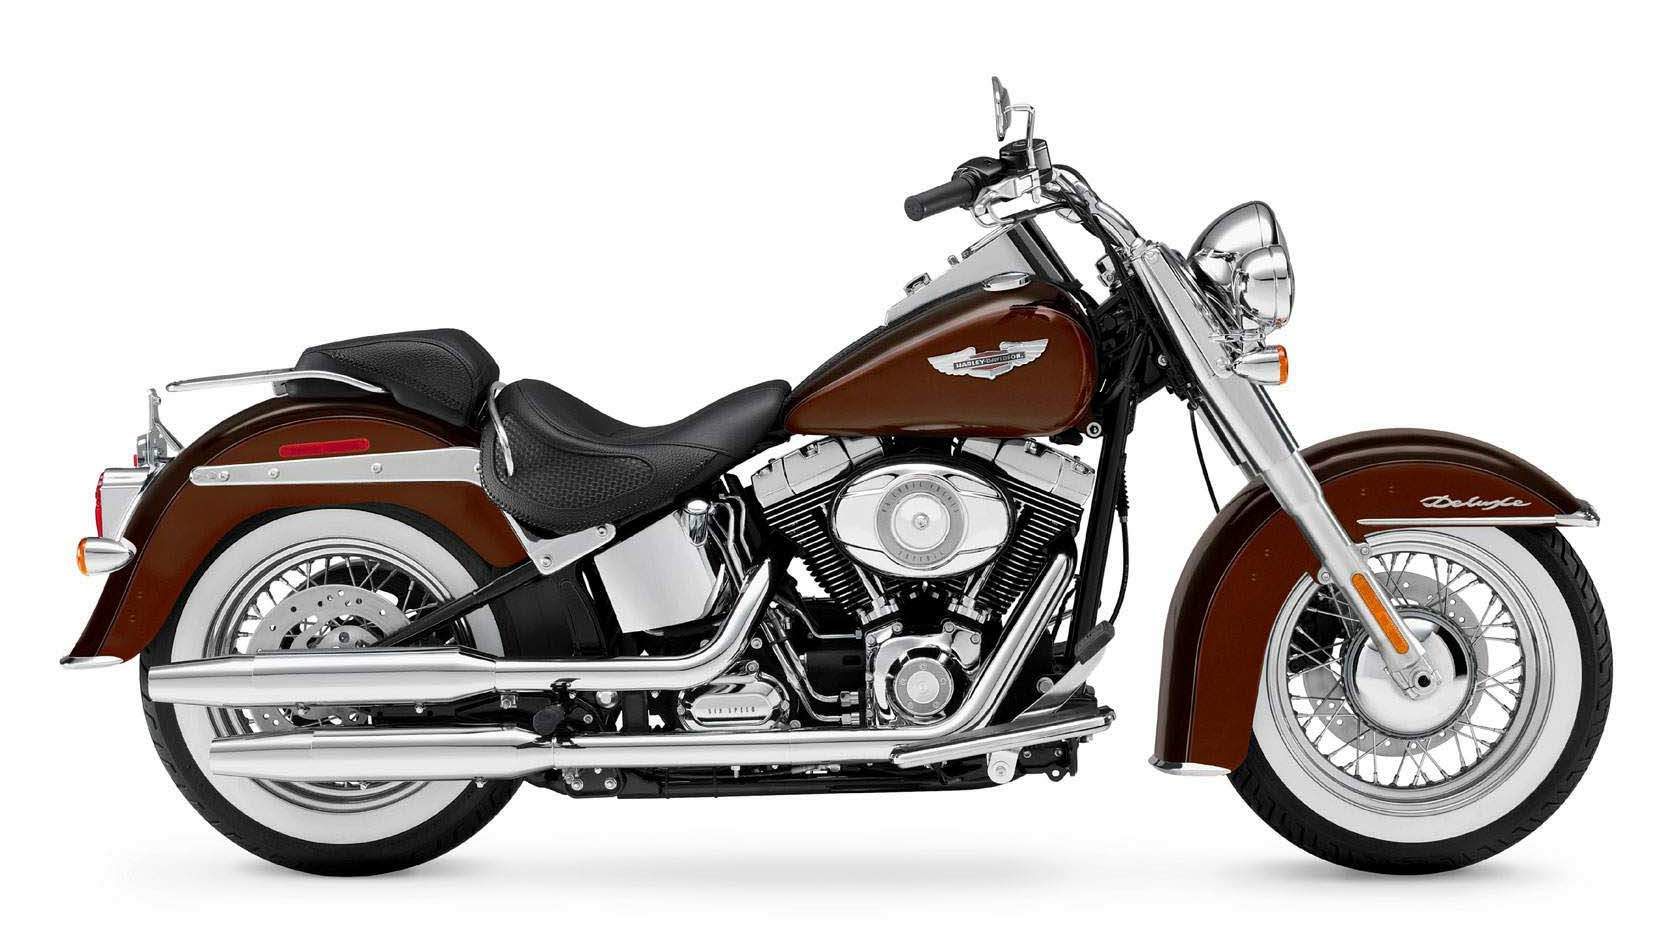 Harley-Davidson Harley Davidson FLSTN Softail Deluxe (2011) especificaciones técnicas